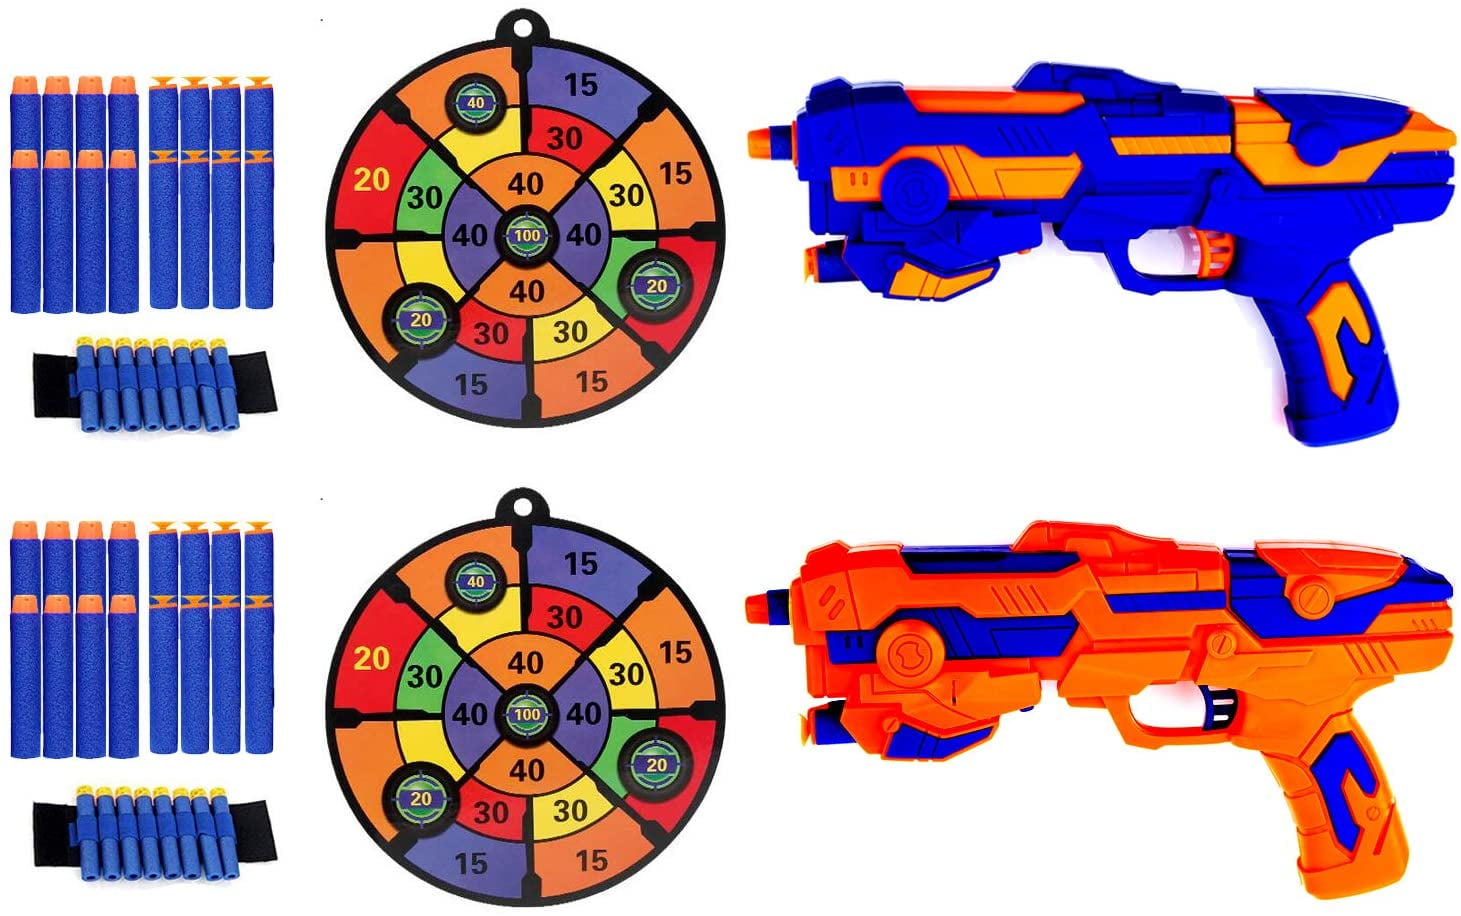 Lot 100-1000Pcs Bullet Darts For NERF N-Strike Kids Toy Gun Blasters Gift 